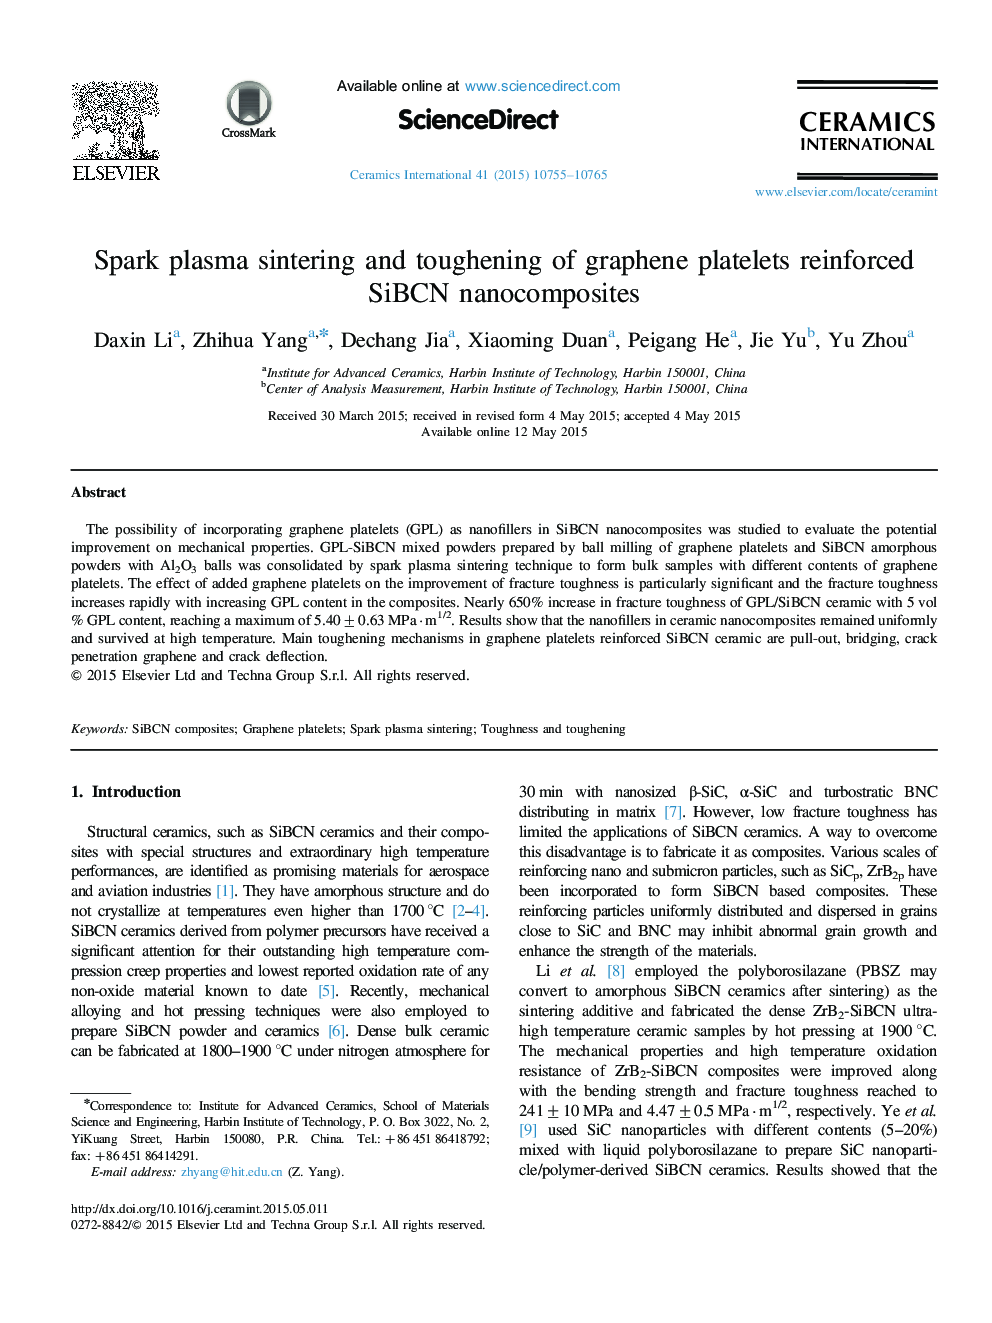 Spark plasma sintering and toughening of graphene platelets reinforced SiBCN nanocomposites